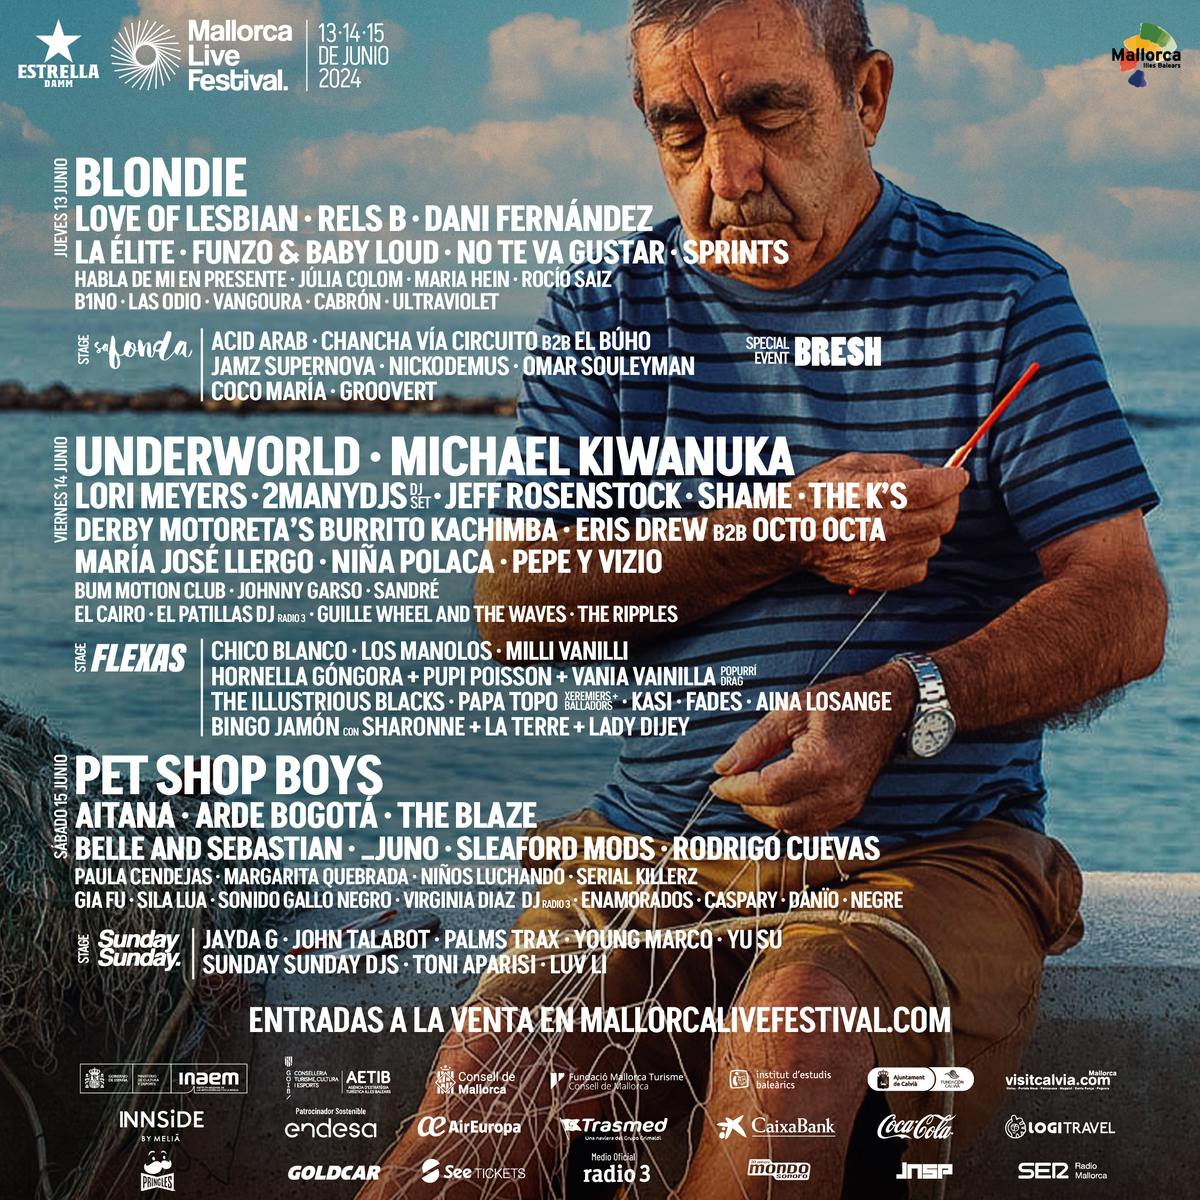 2-Day Ticket (Thursday+Saturday) Mallorca Live Festival 2024